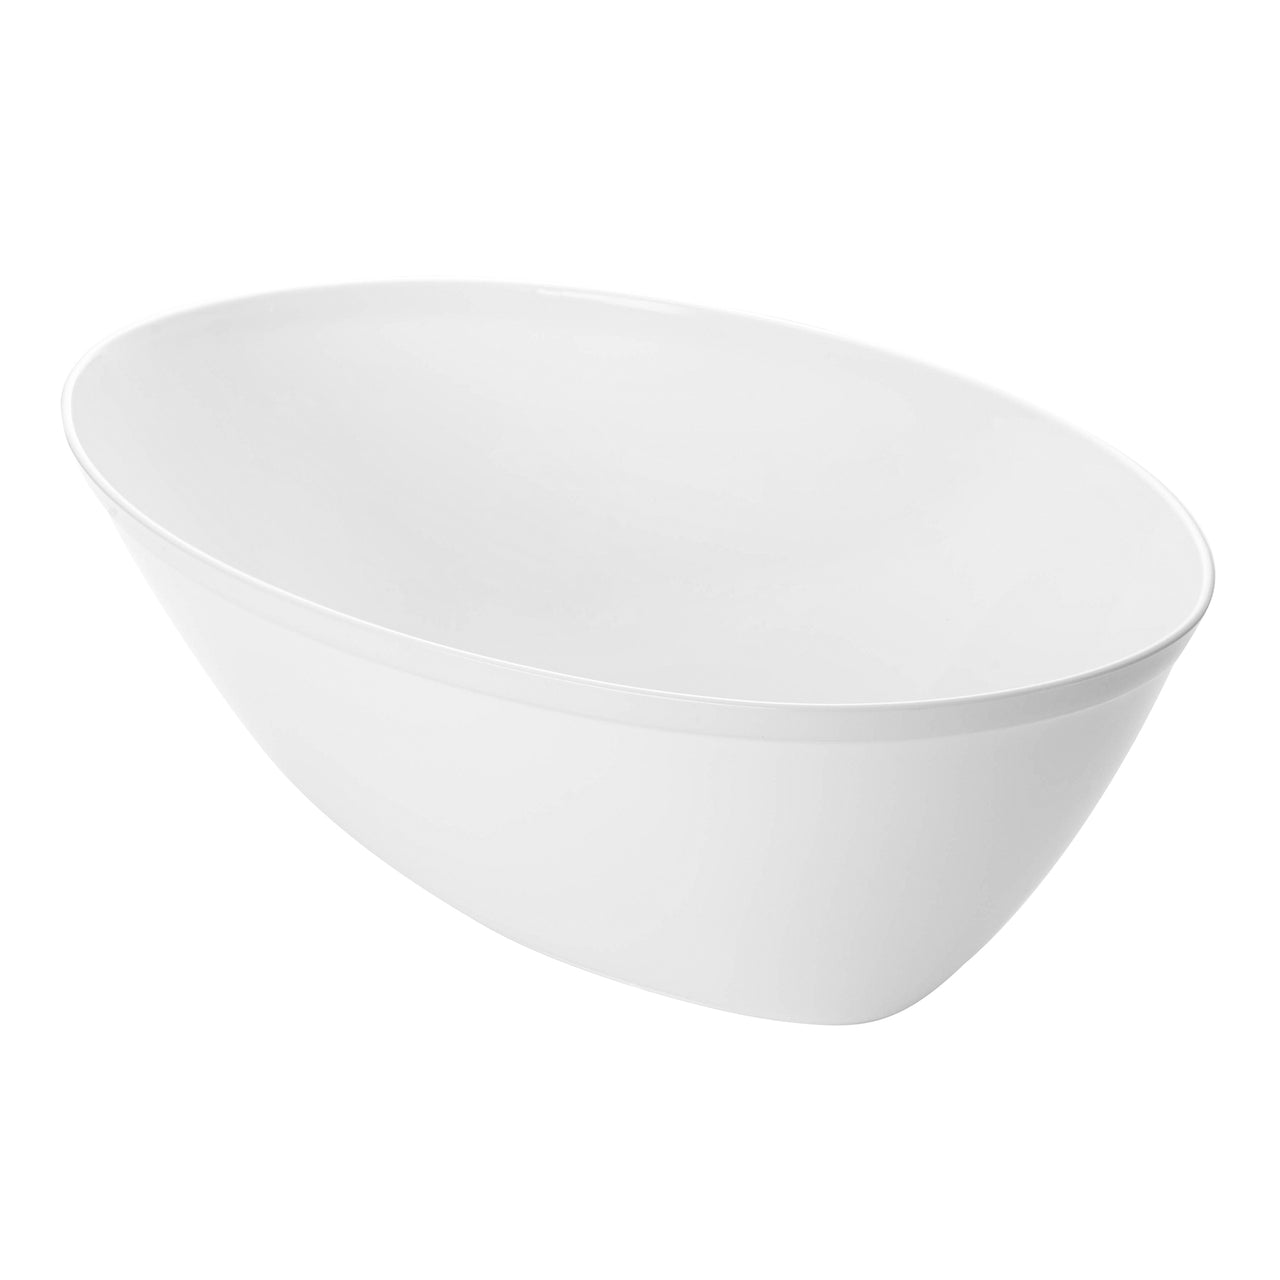 White Oval Plastic Serving Bowls (2 qt.)